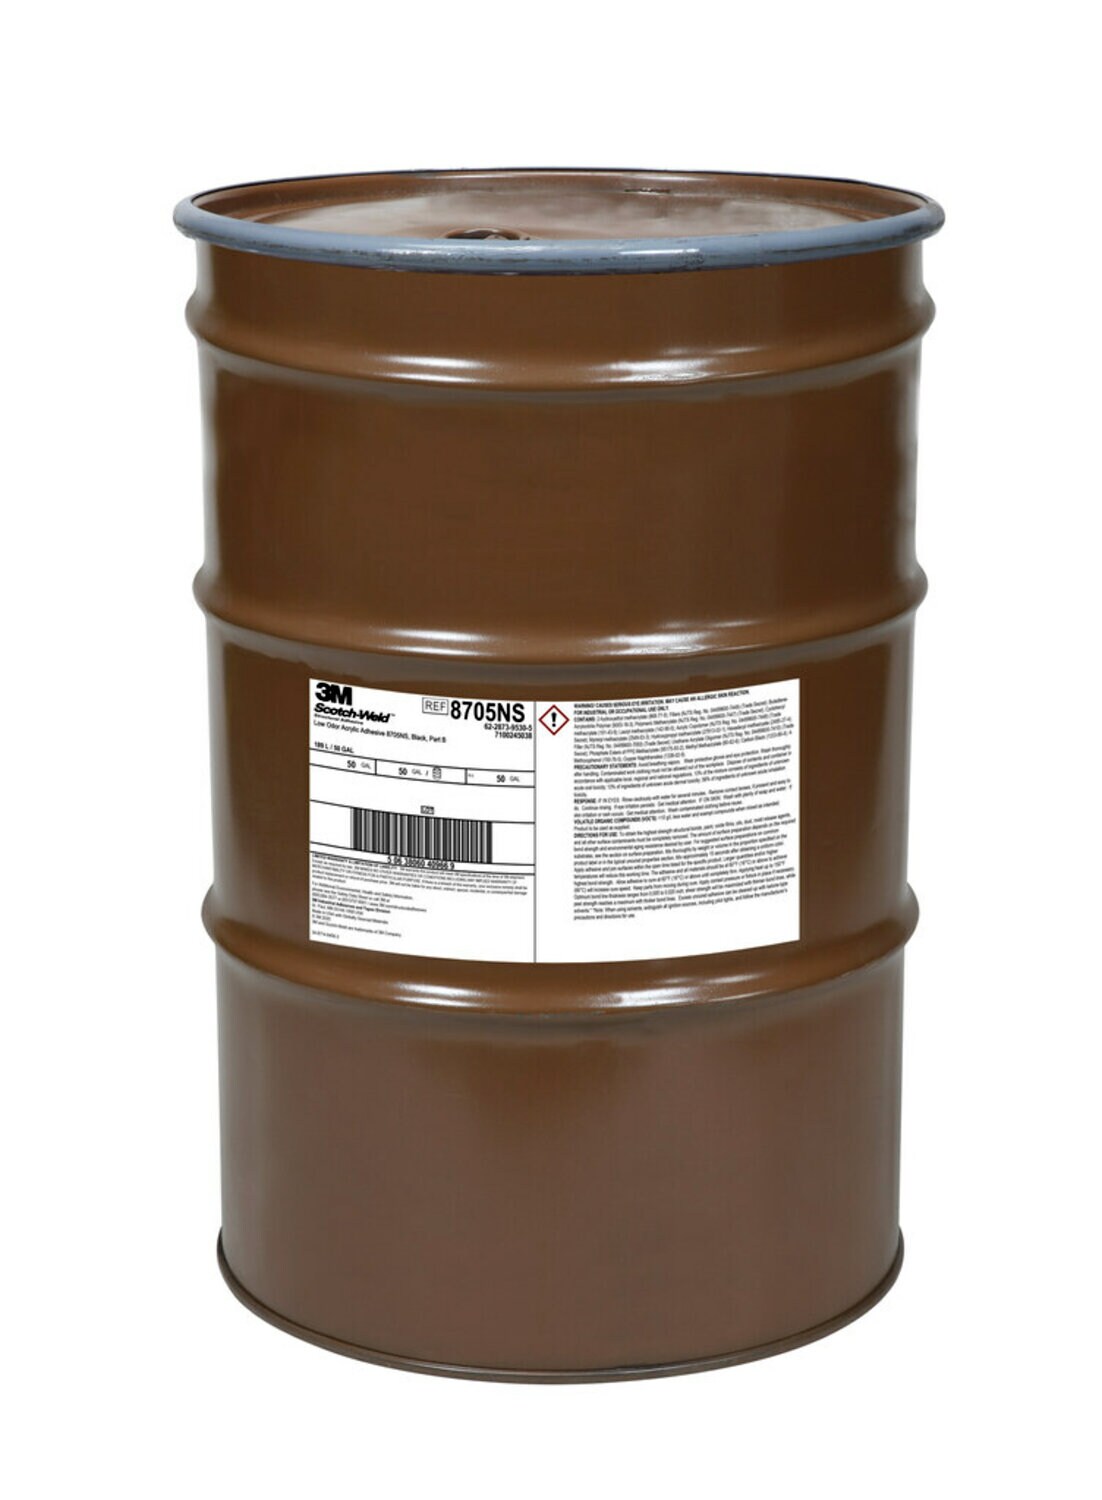 7100245038 - 3M Scotch-Weld Low Odor Acrylic Adhesive 8705NS, Black, Part B, 55
Gallon (Net 50 Gal), Drum